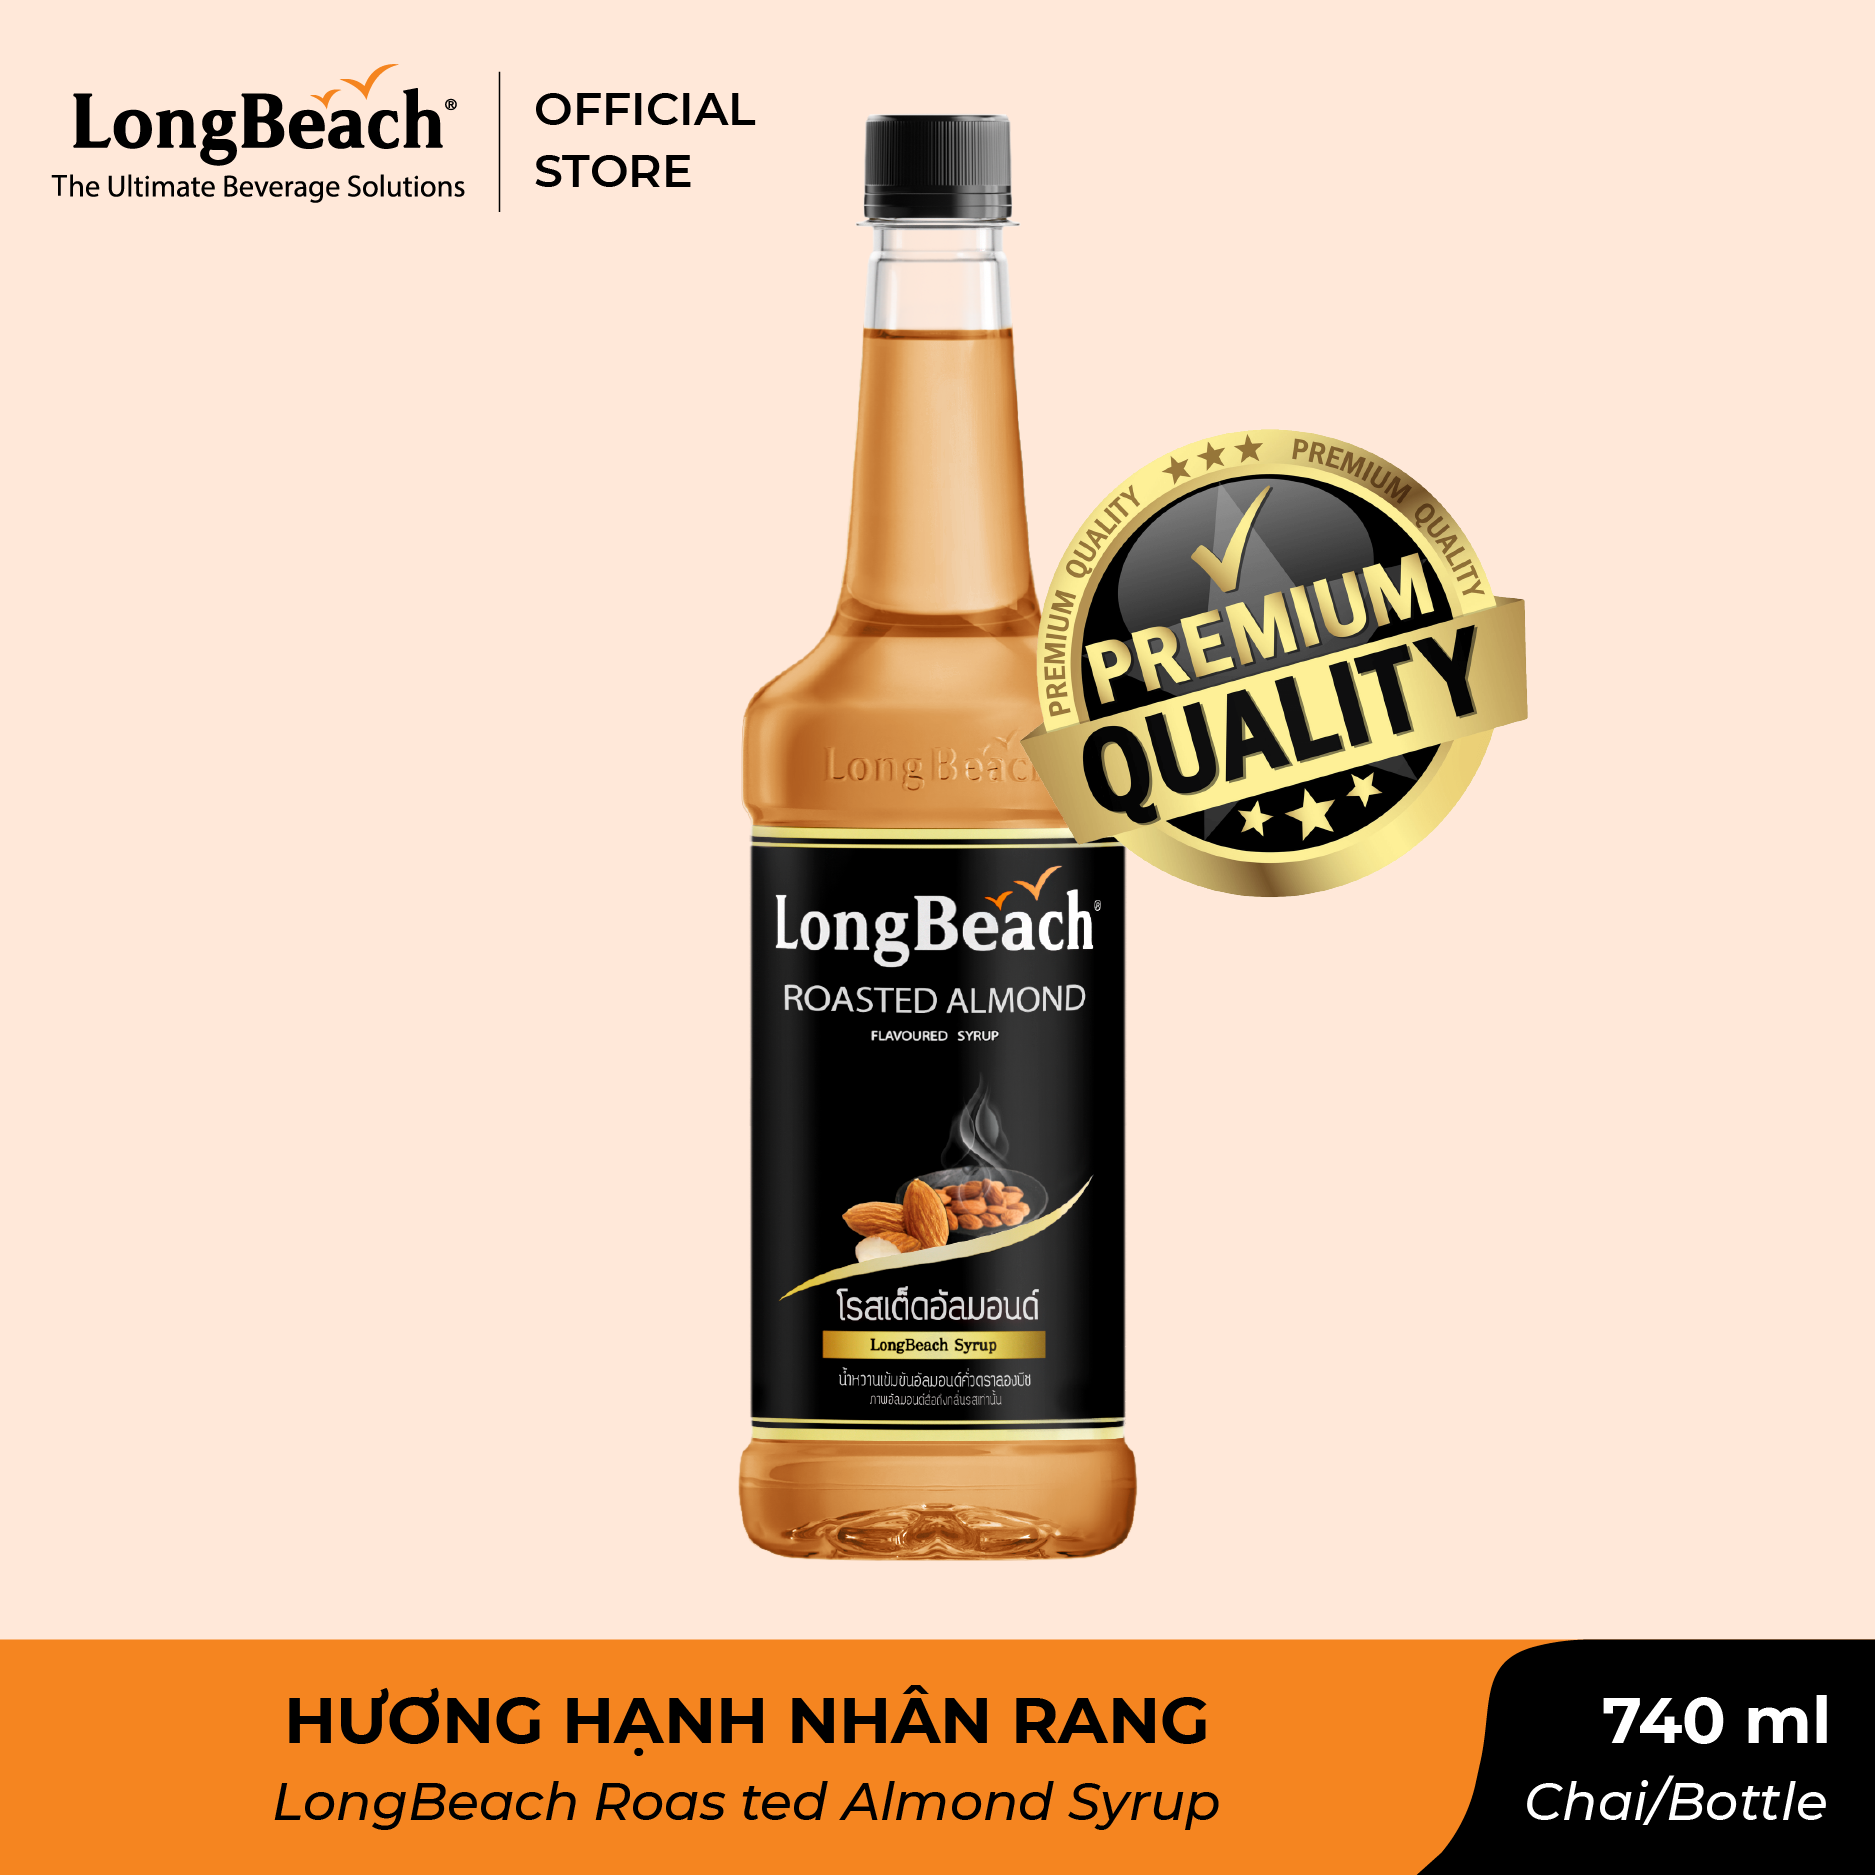 Siro Hạnh Nhân Rang - LongBeach Roasted Almond Flavoured Syrup 740ml